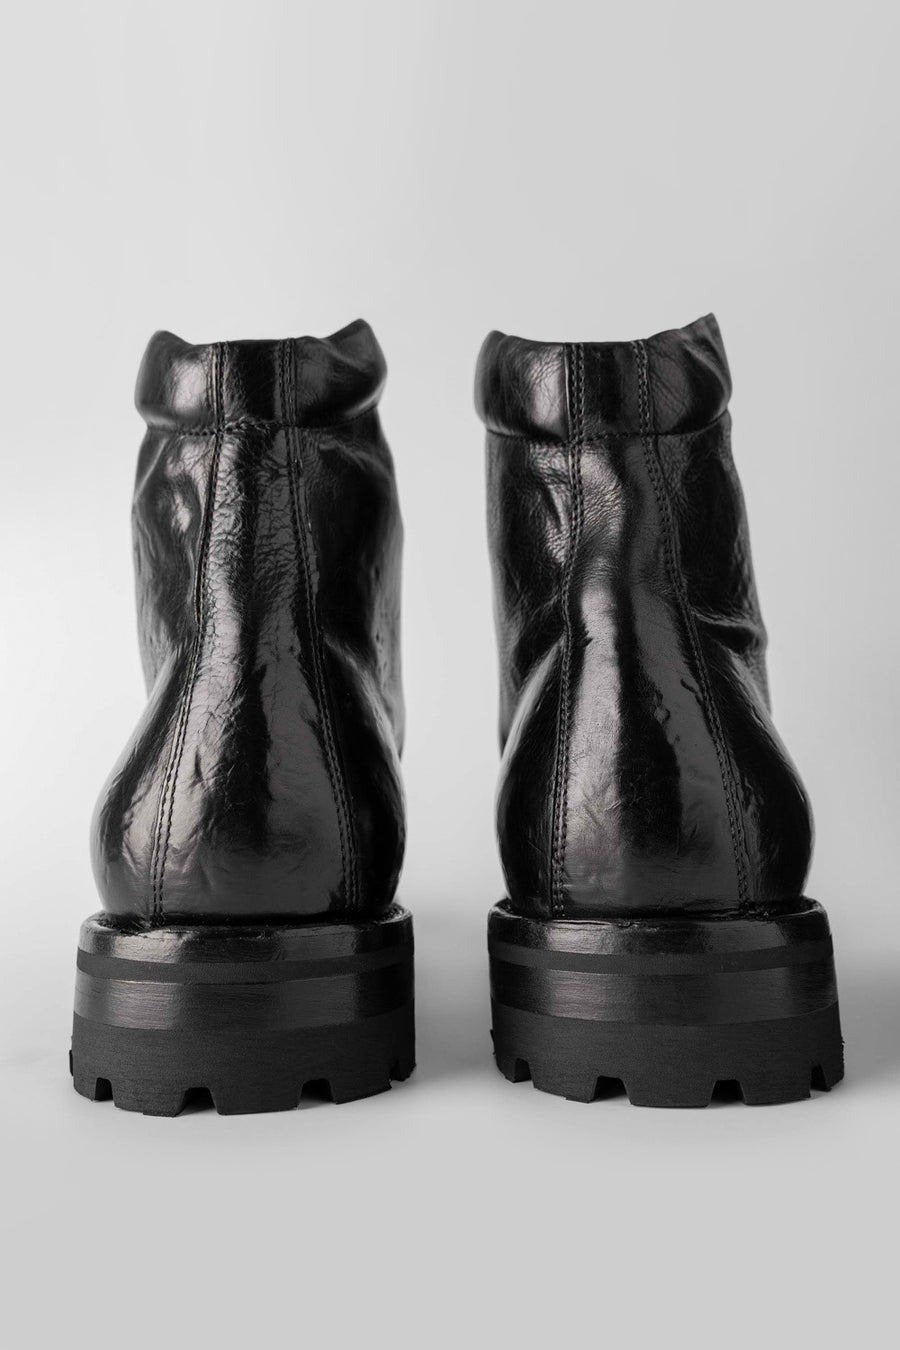 CAMDEN tar-black combat boots